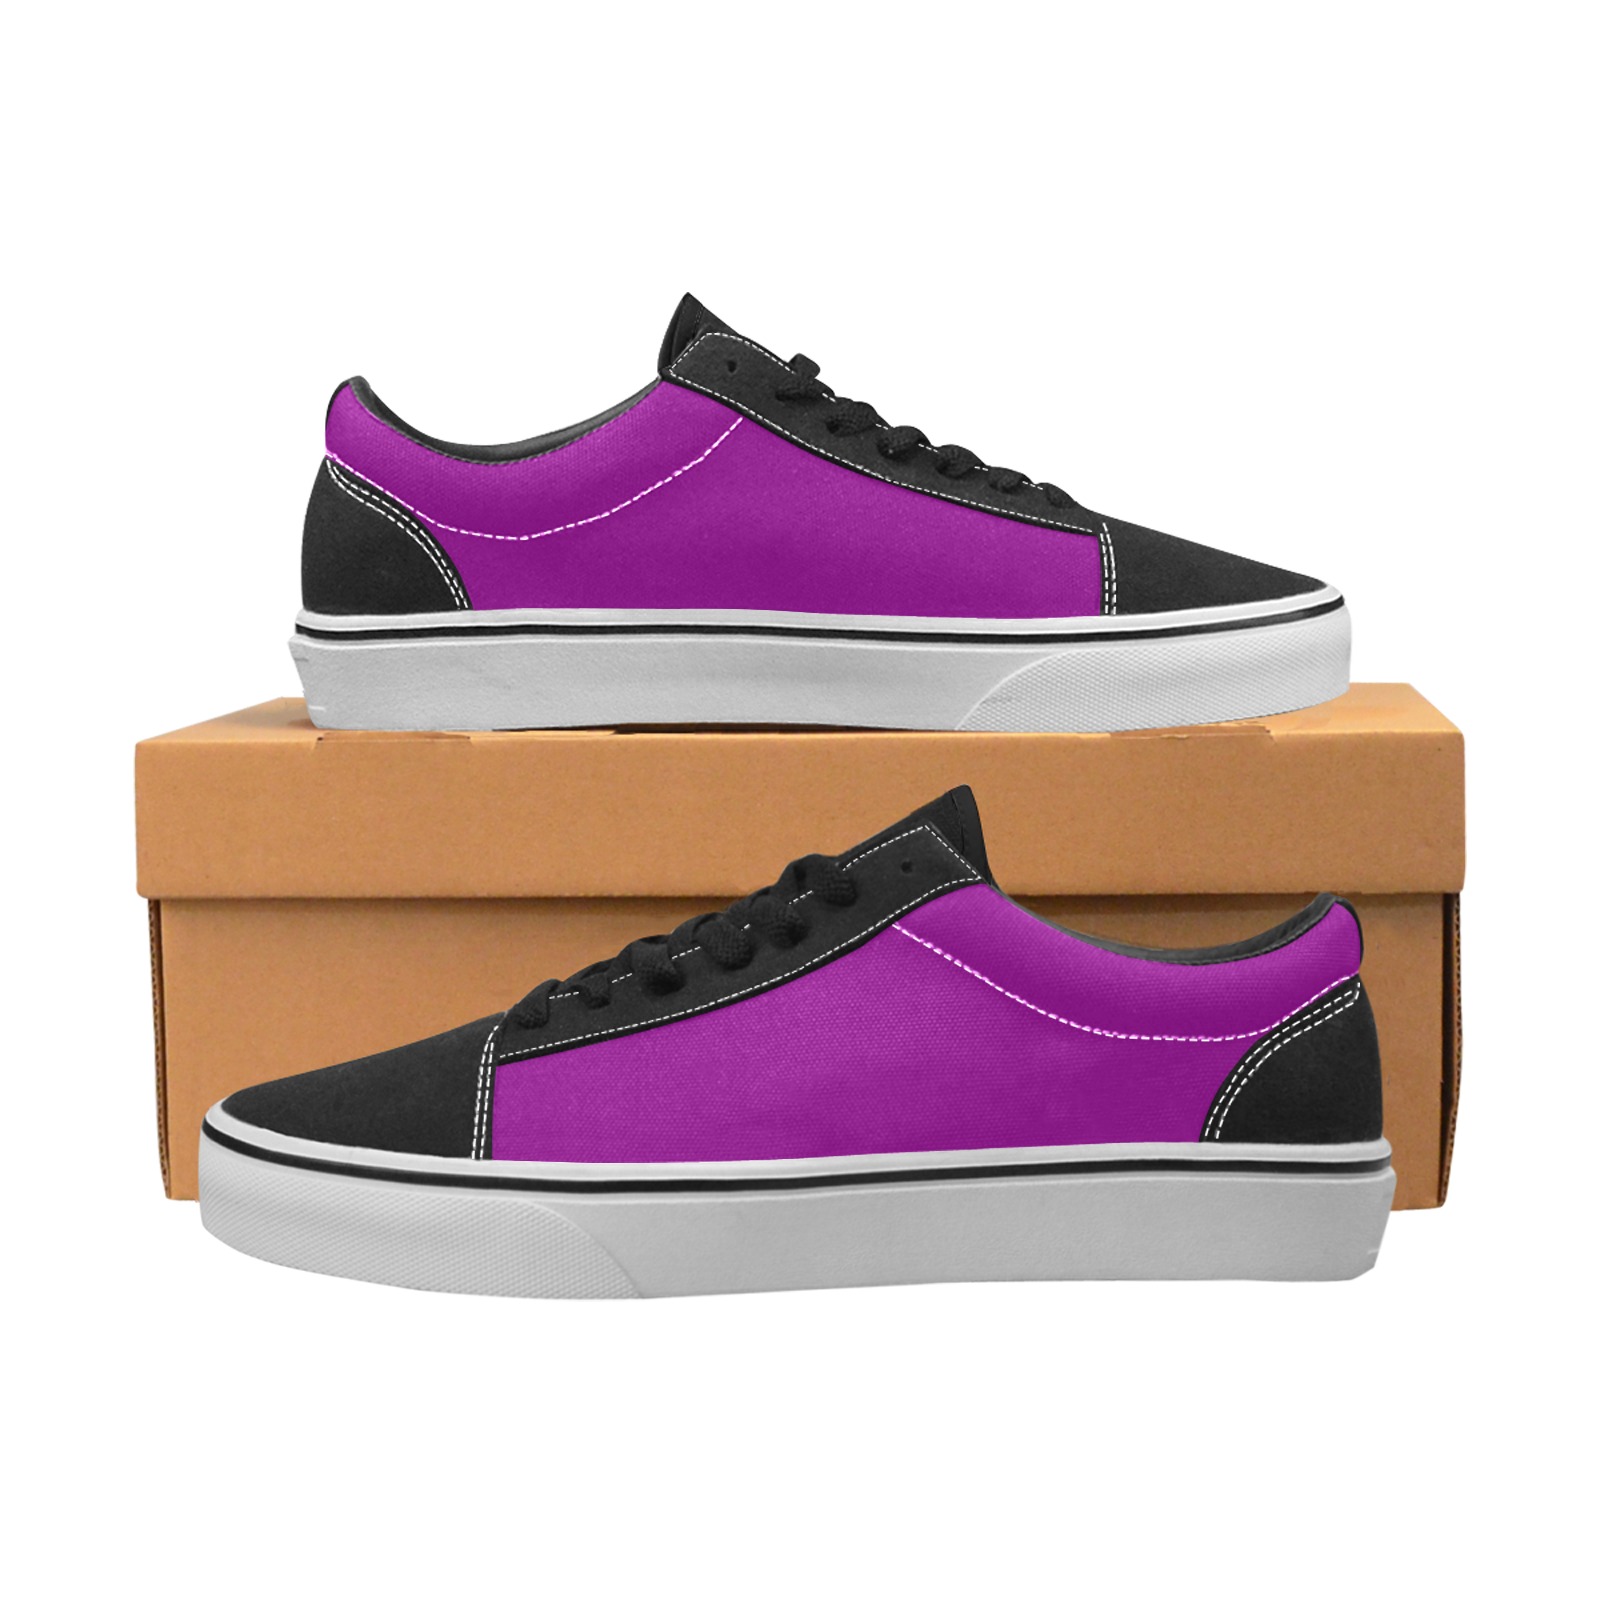 color purple Women's Low Top Skateboarding Shoes (Model E001-2)